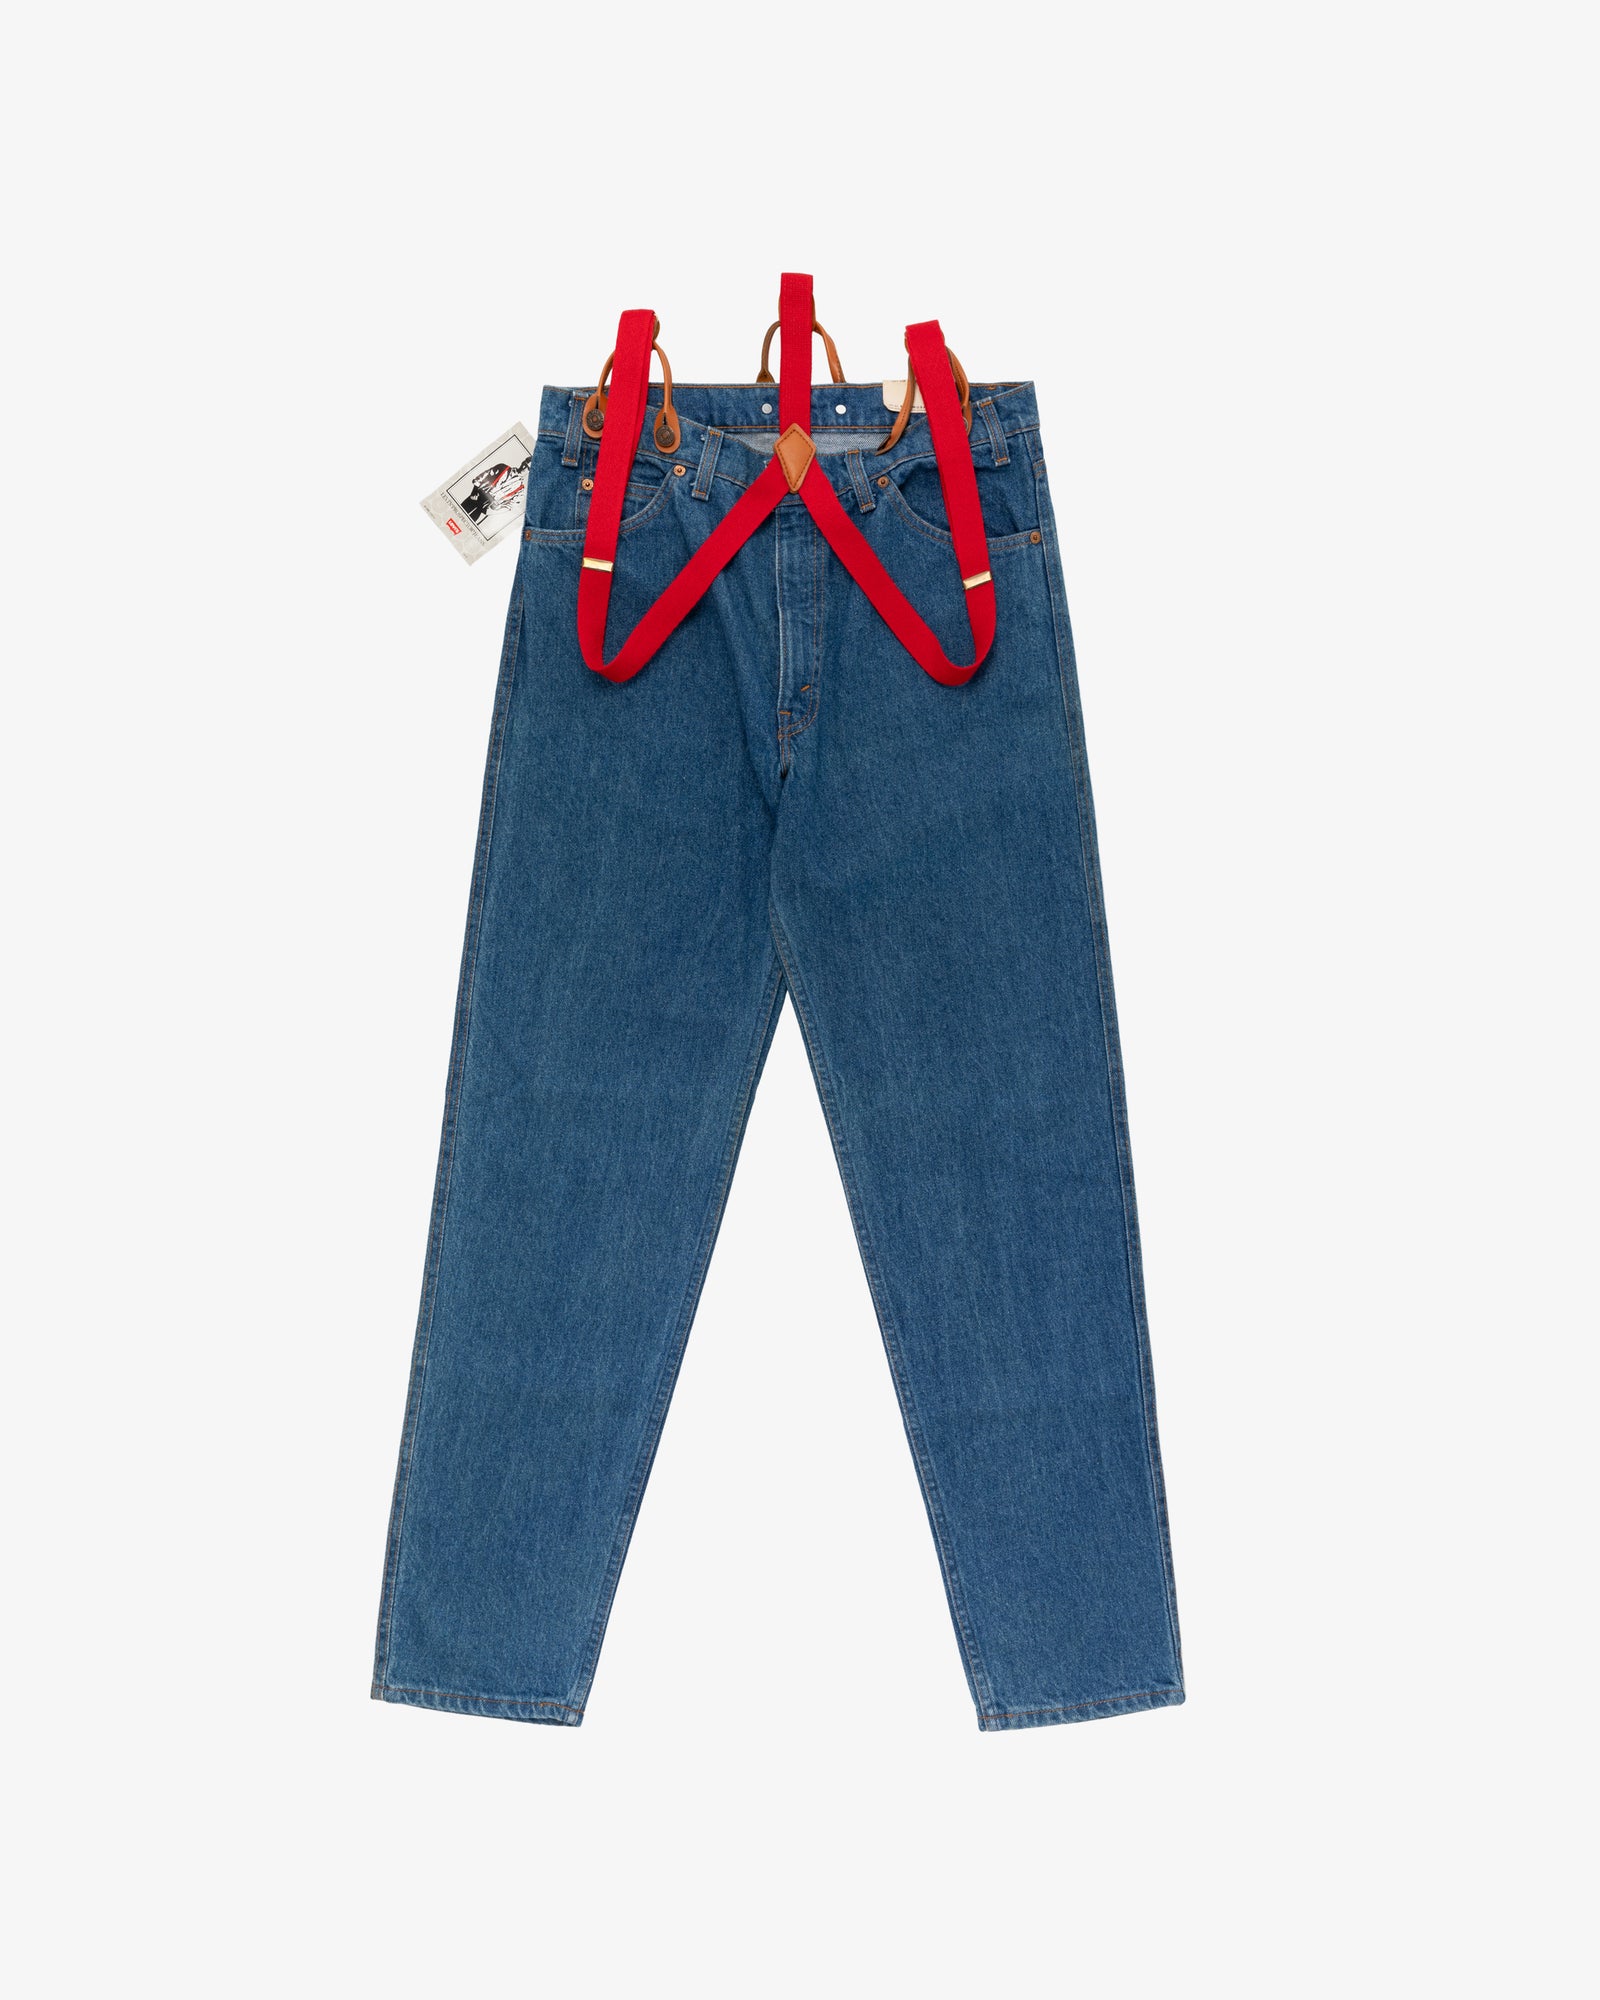 Vintage Levi's Orange Tab Prospector Jeans with Suspenders